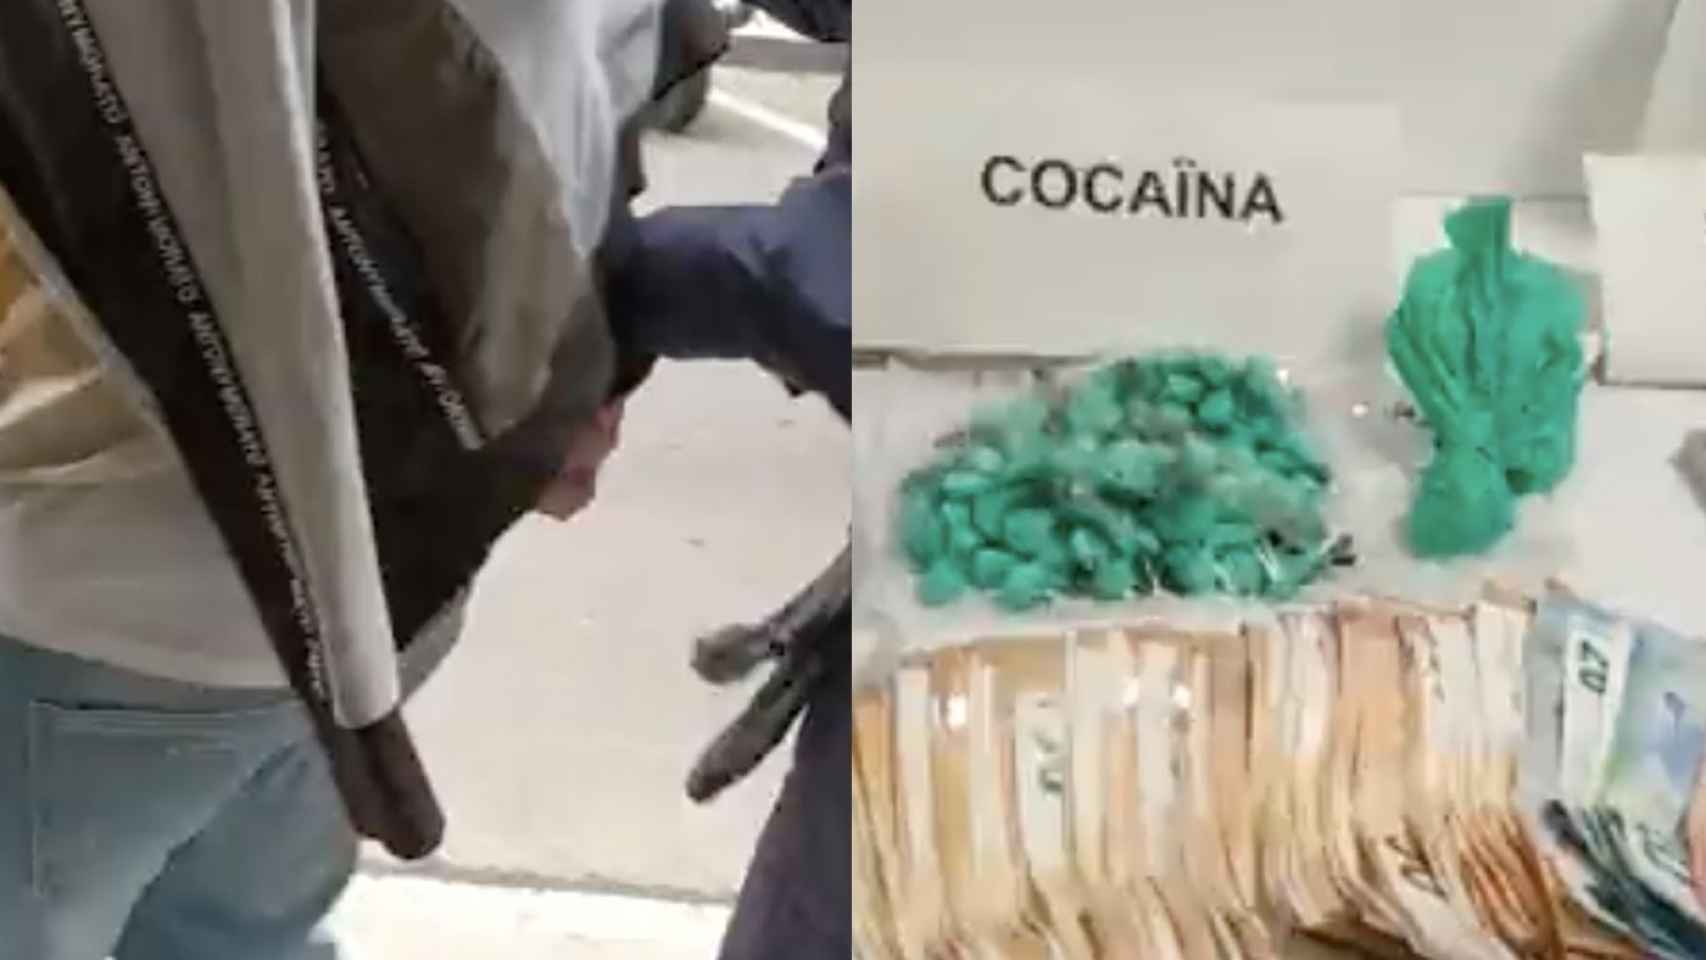 Imágenes del dispositivo policial en el que se ha desmantelado un punto de venta de cocaína en L'Hospitalet / MOSSOS D'ESQUADRA